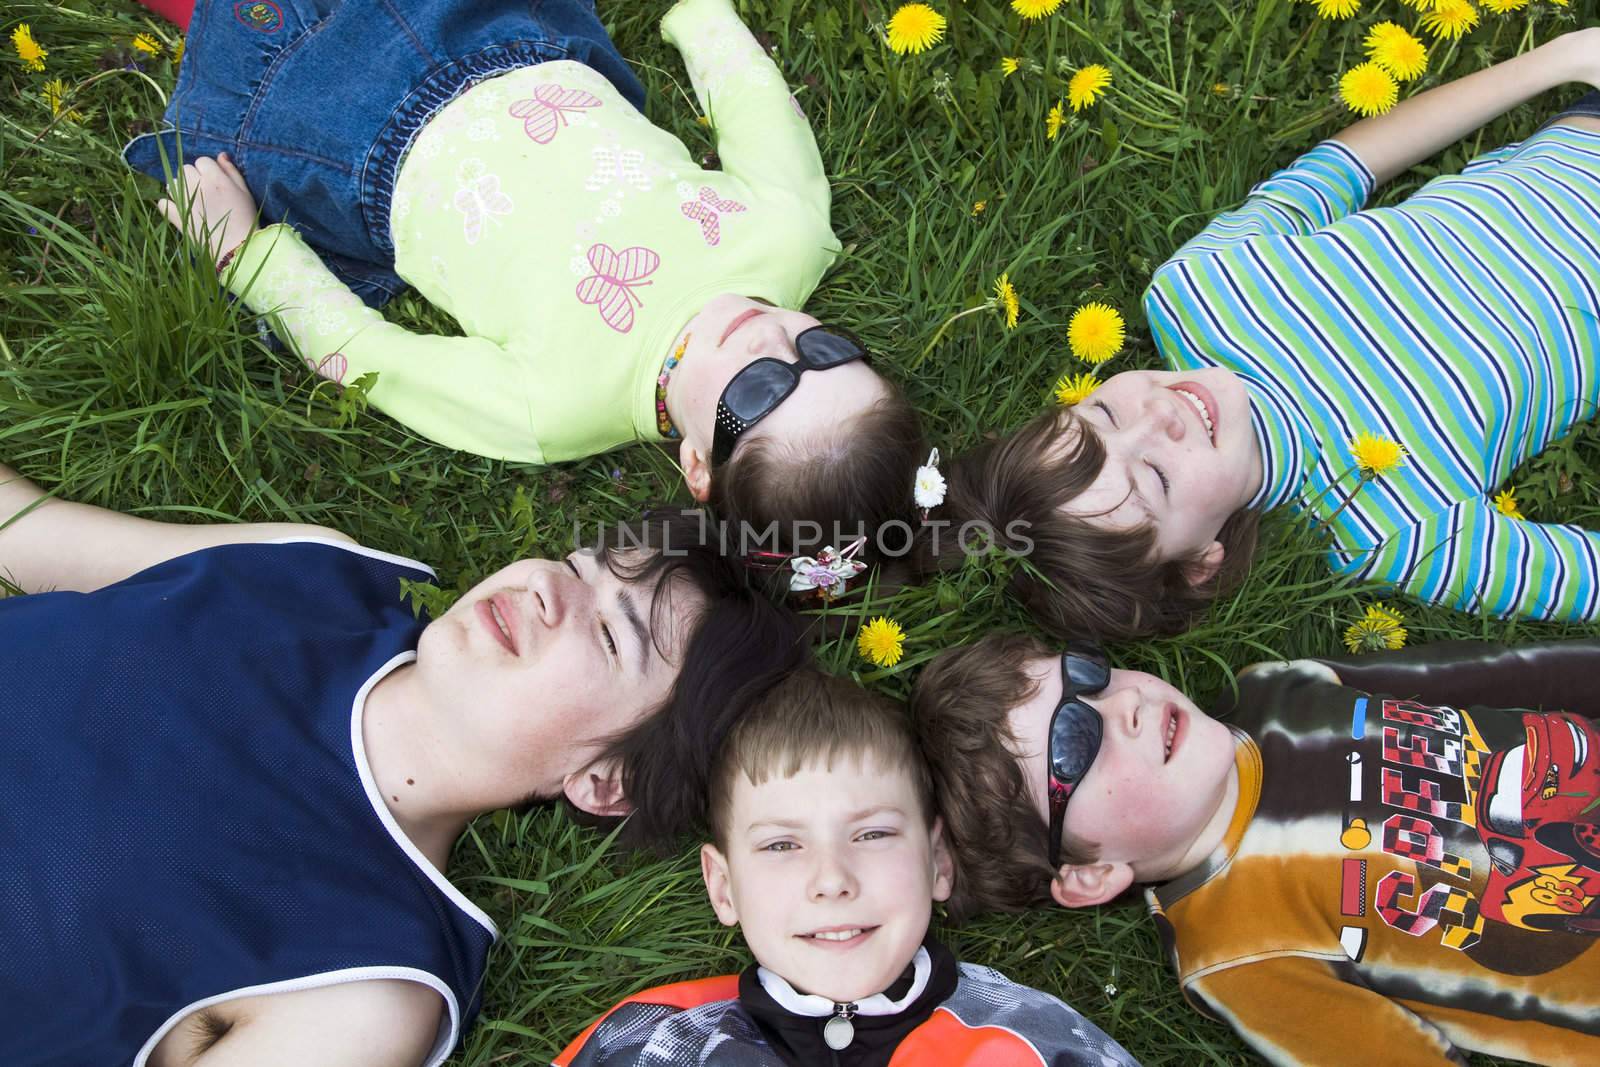 Children wearing sunglasses resting on the grass